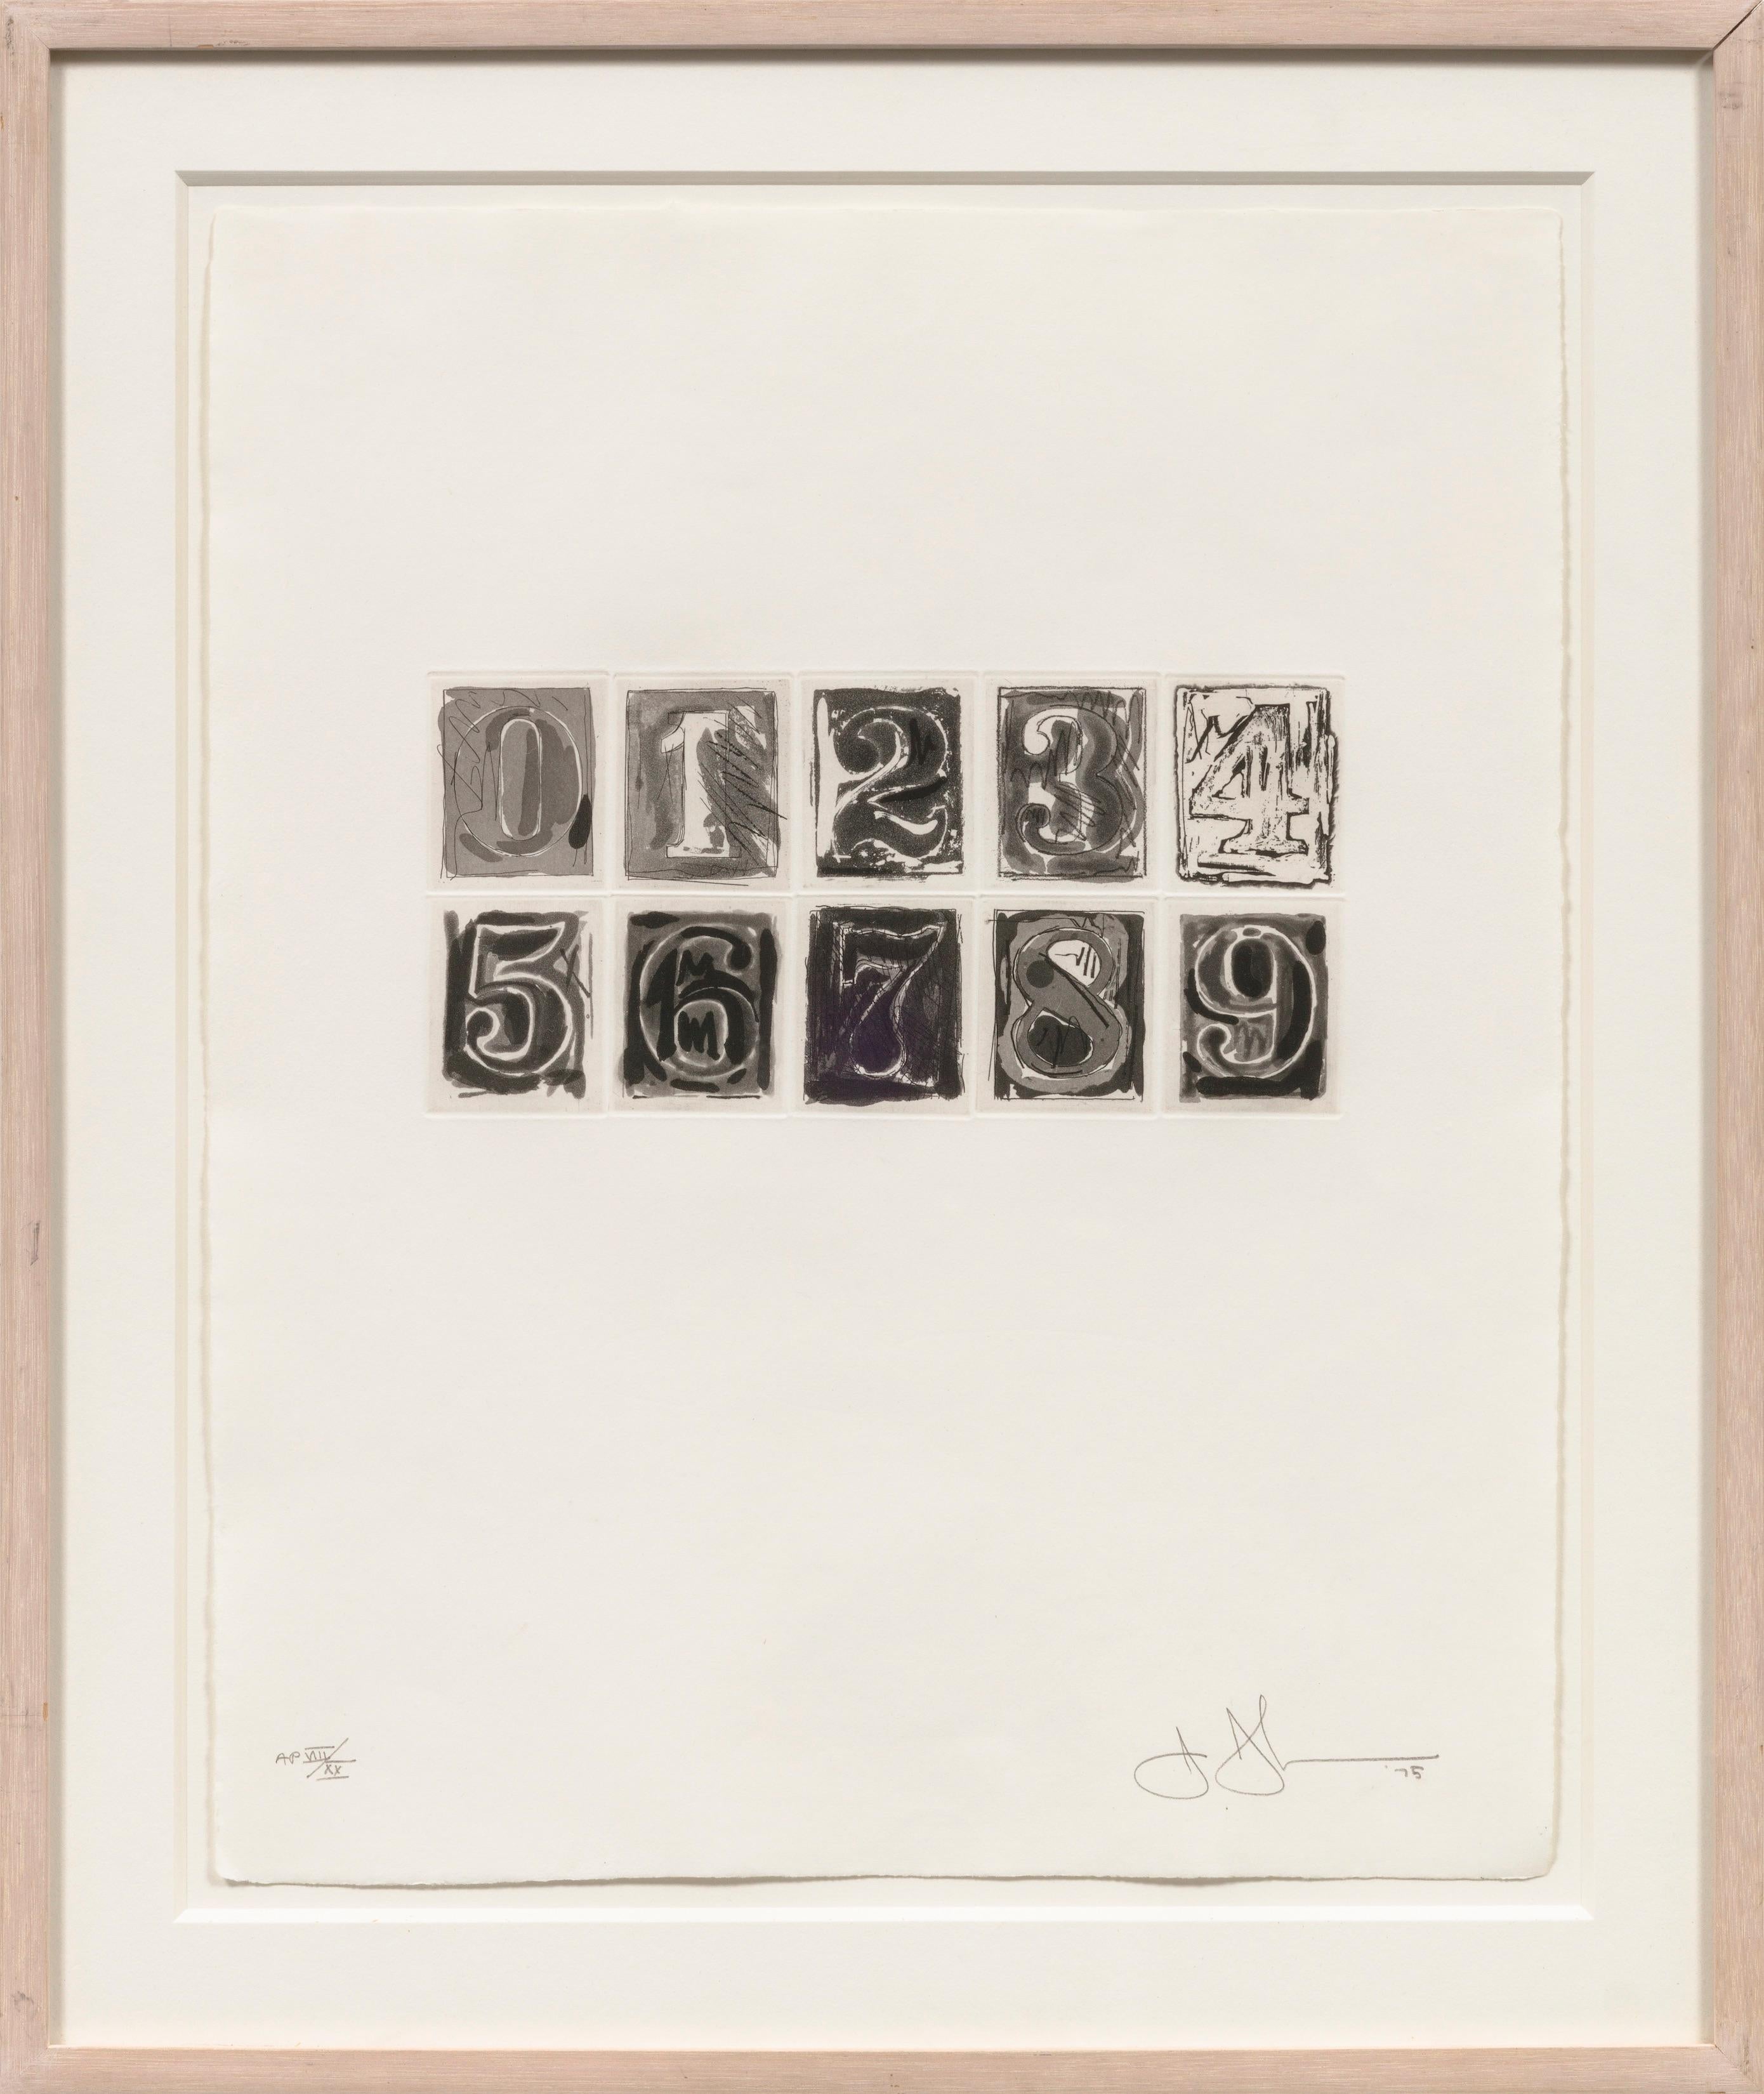 Jasper Johns Figurative Print - 0-9